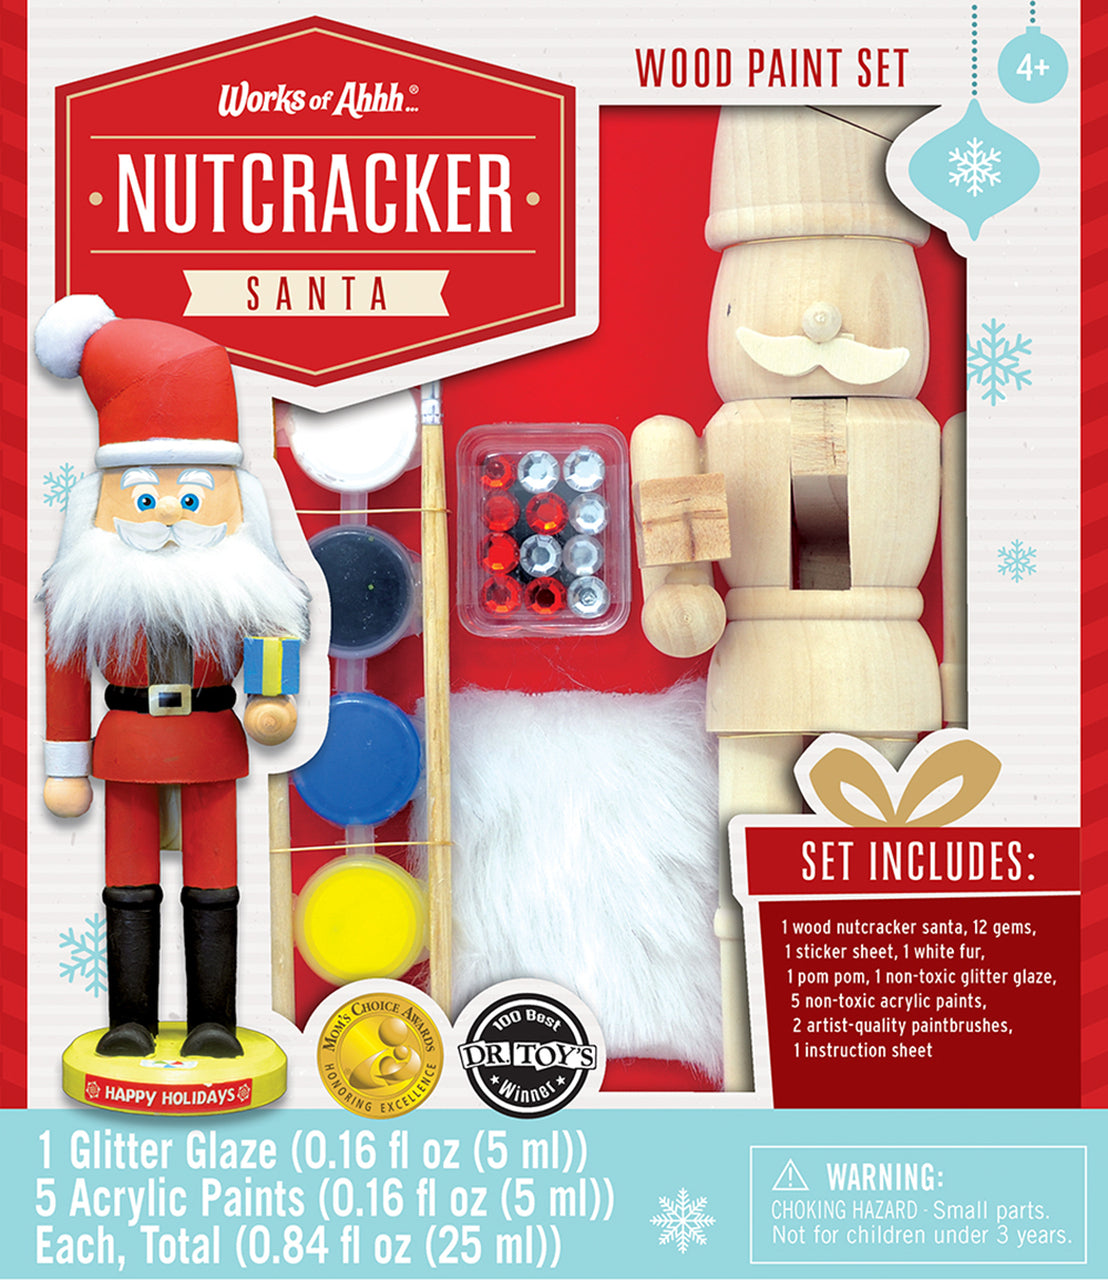 Nutcracker Santa Holiday Wood Paint Kit by Masterpieces